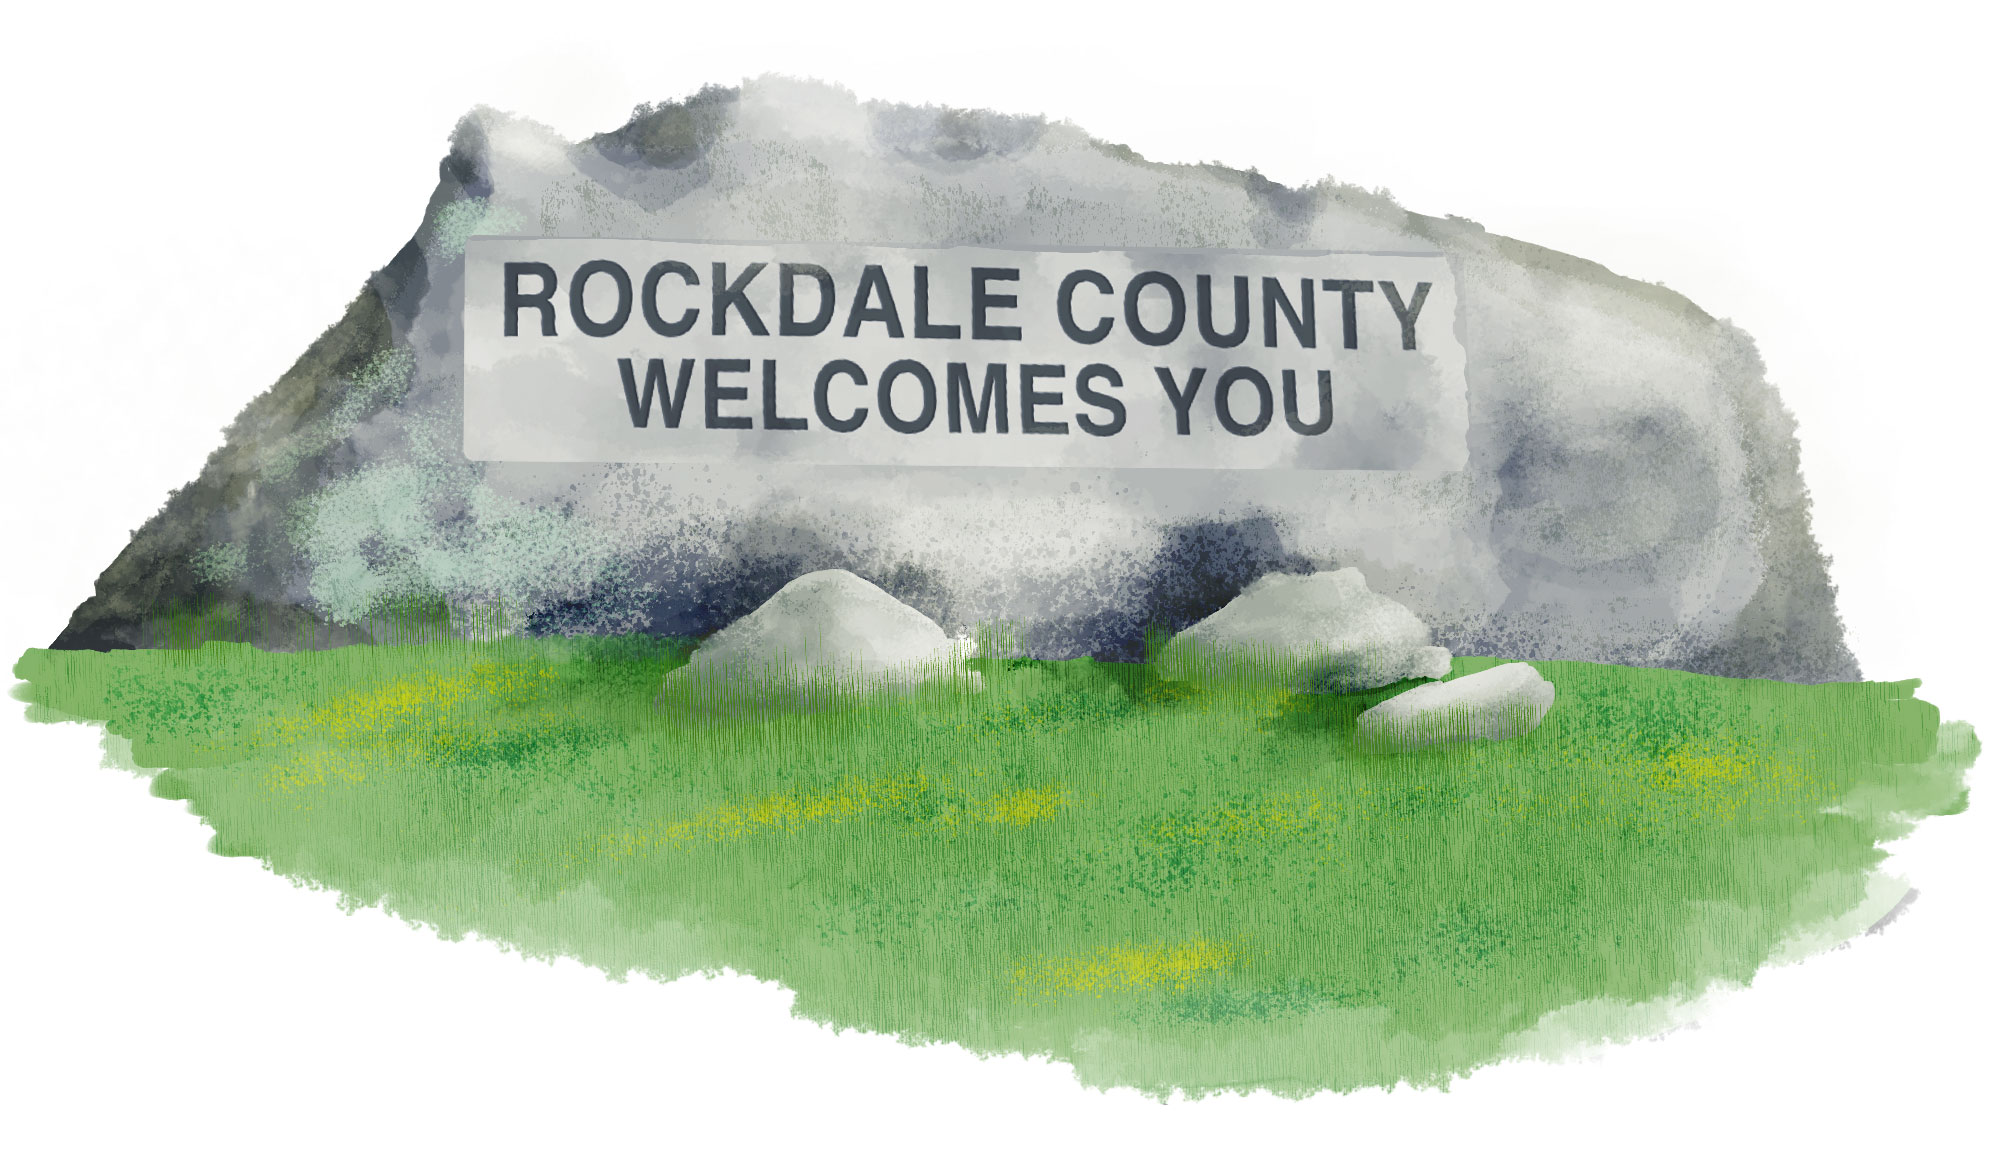 Rockdale County Welcomes You sign illustration